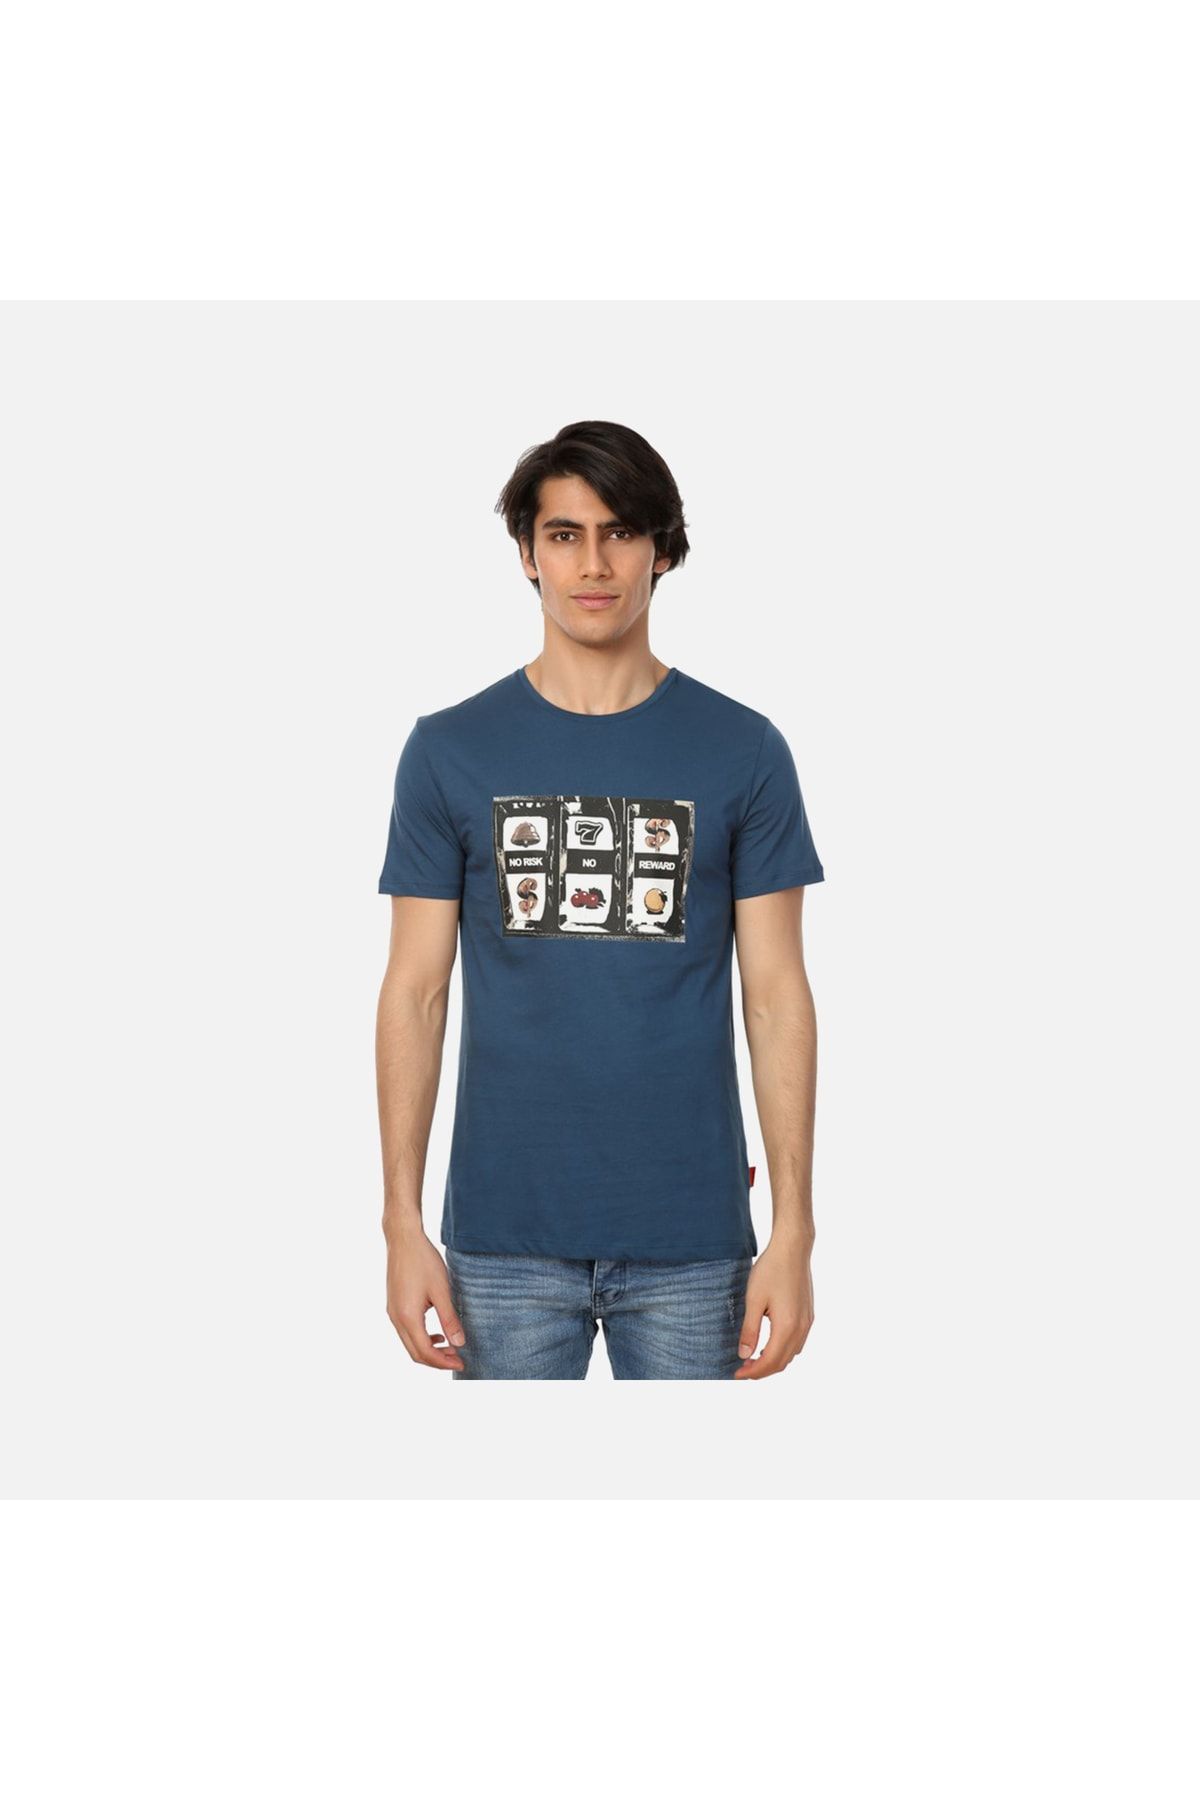 John Frank Slot Erkek Baskılı T-shirt